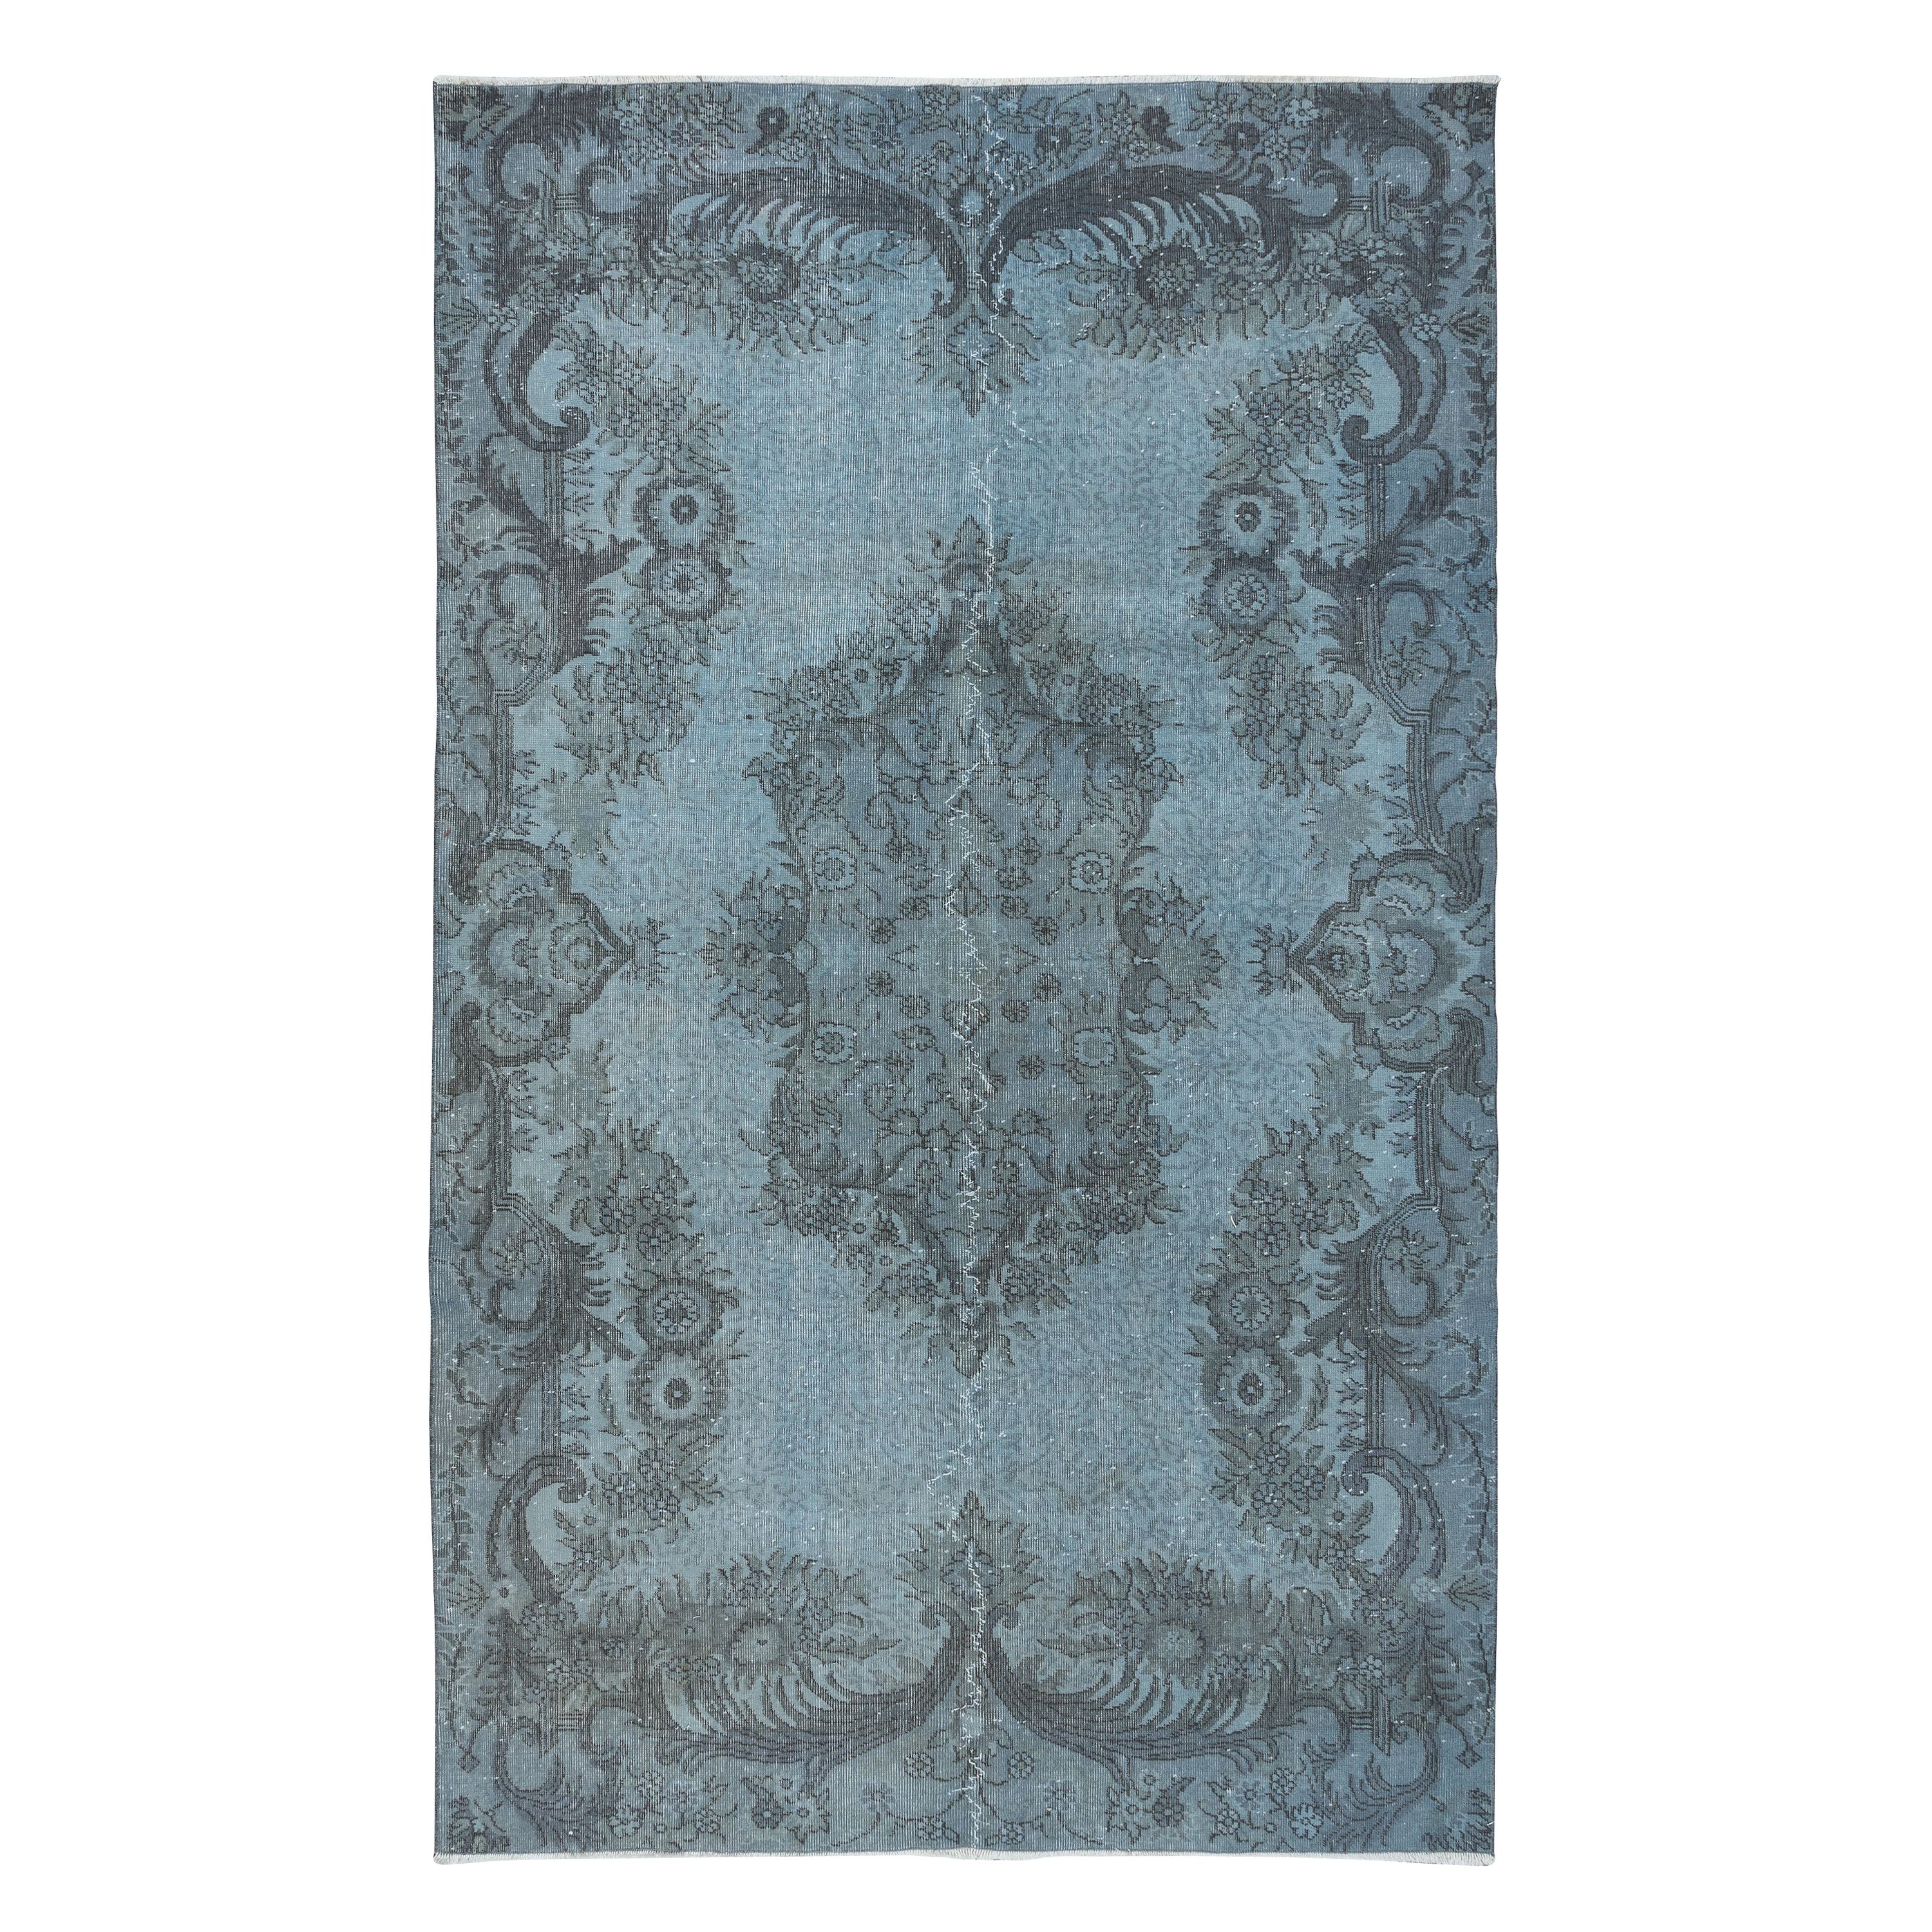 6.2x10 Ft Modern Handmade Wool Area Rug in Light Blue, Turkish Low Pile Carpet